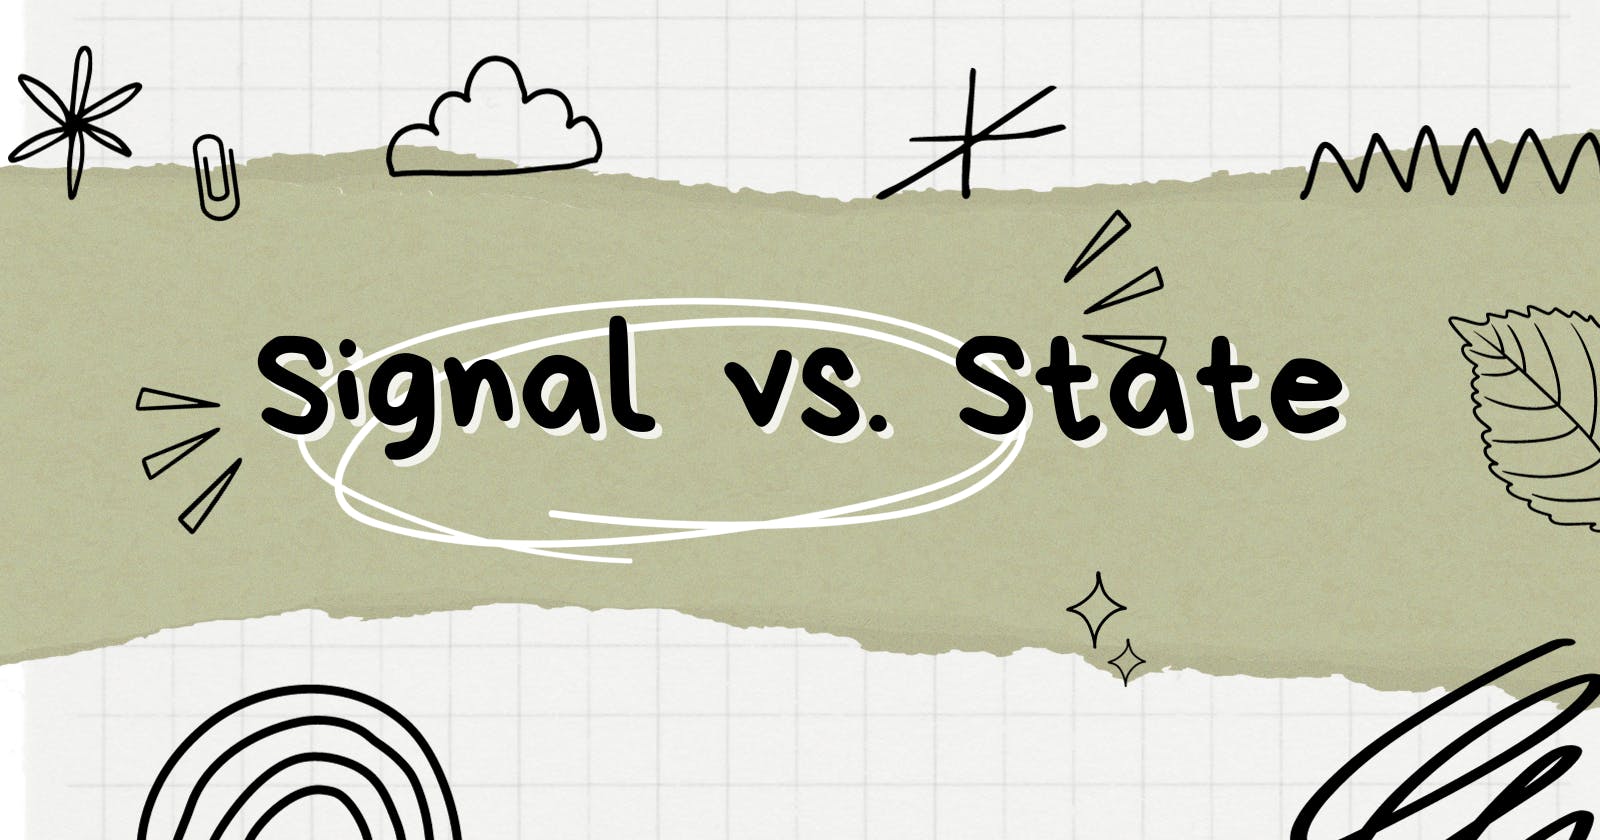 Signals vs. State